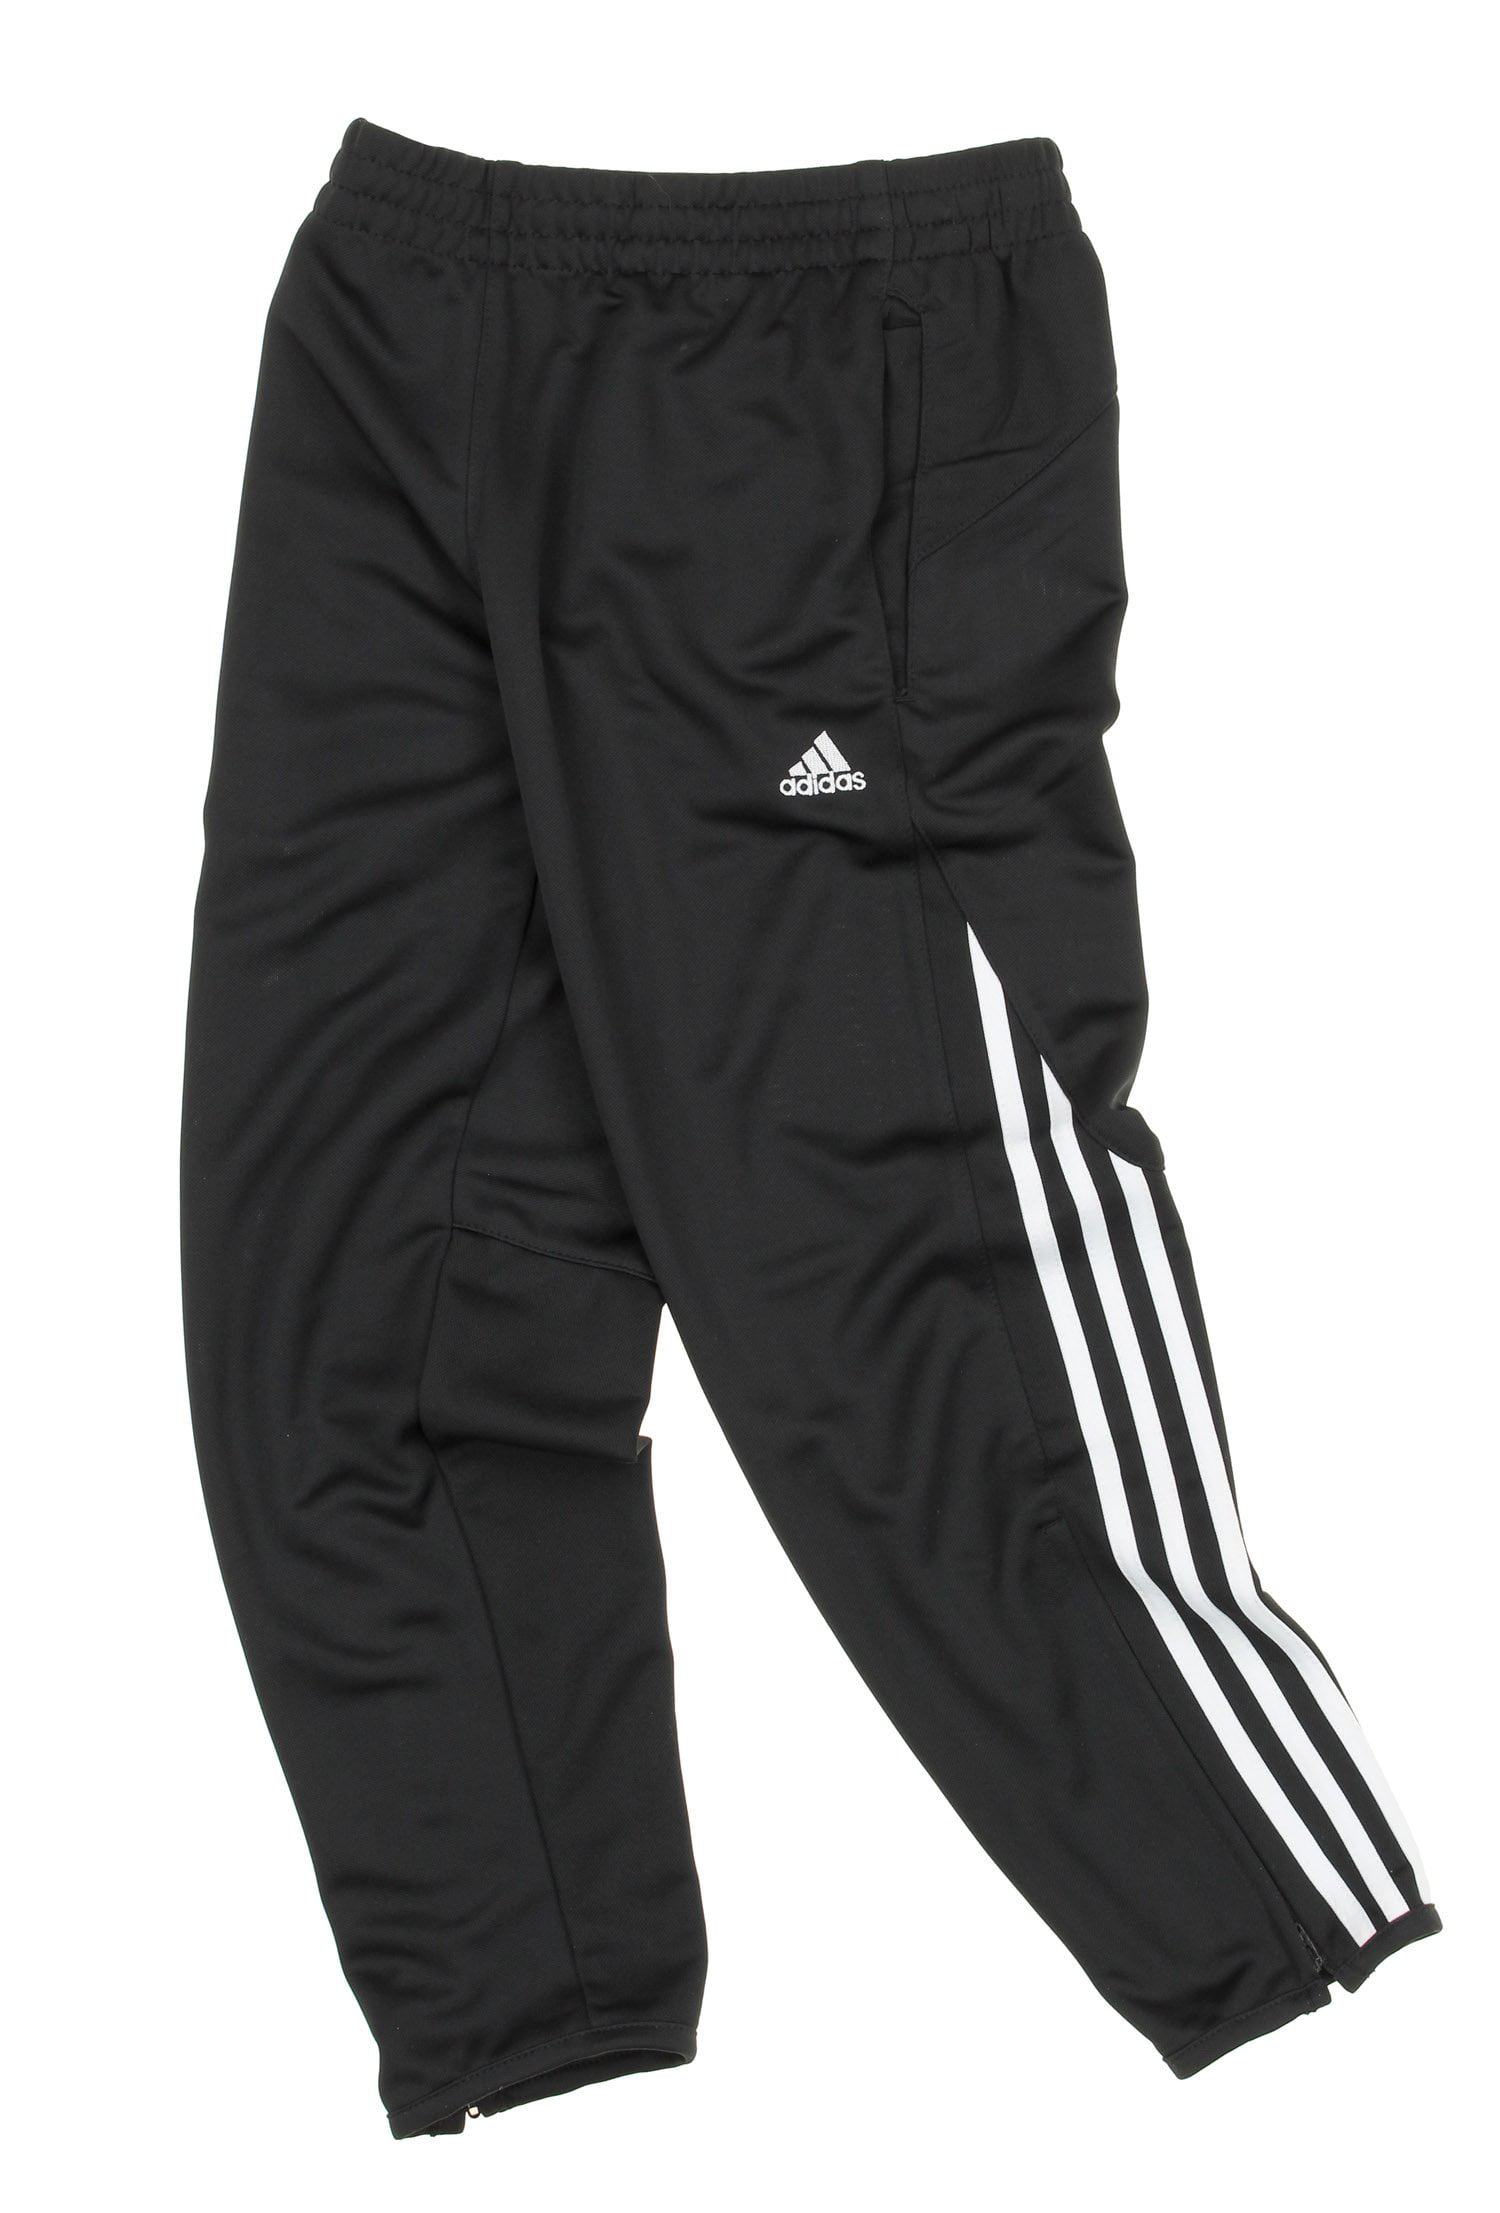 Best 25 Deals for Adidas Climalite 3 Stripe Pants  Poshmark